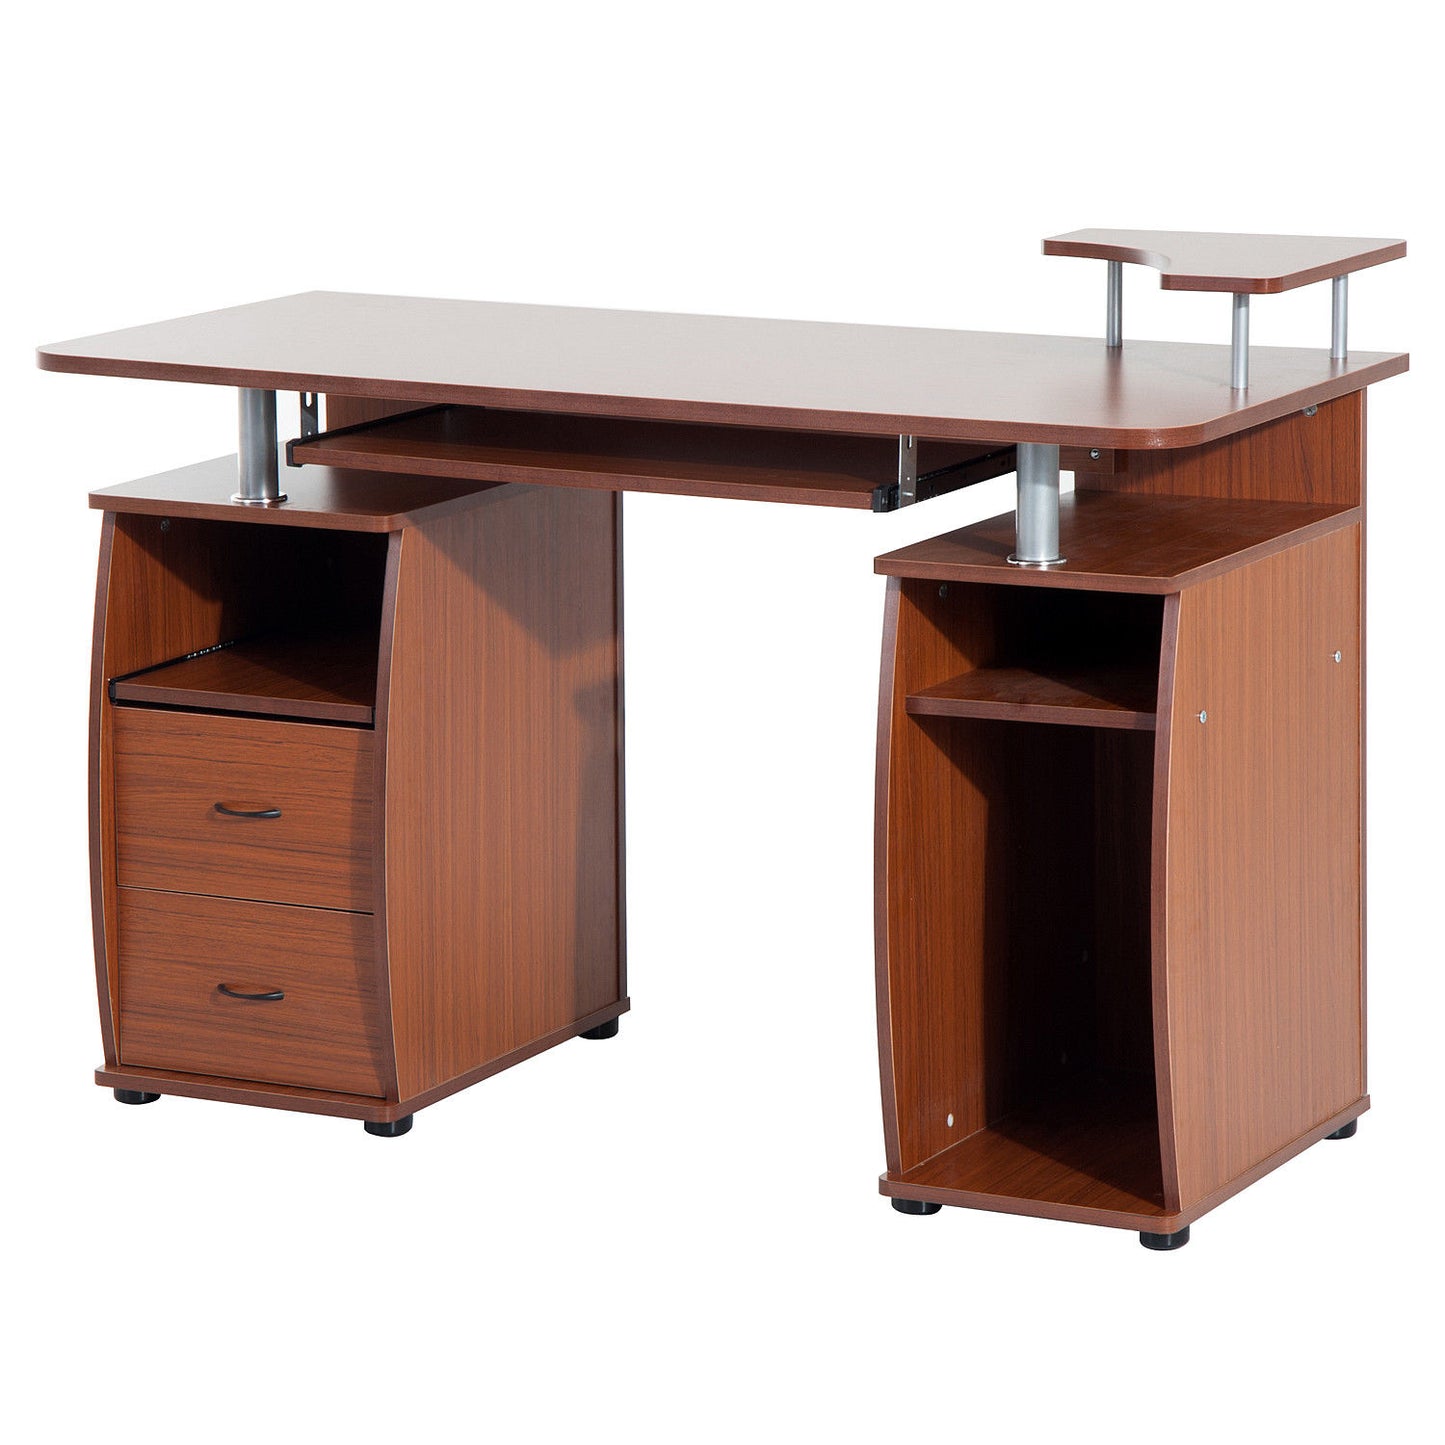 HOMCOM MDF Multi-Level Home Office Workstation Desk with Drawers Brown